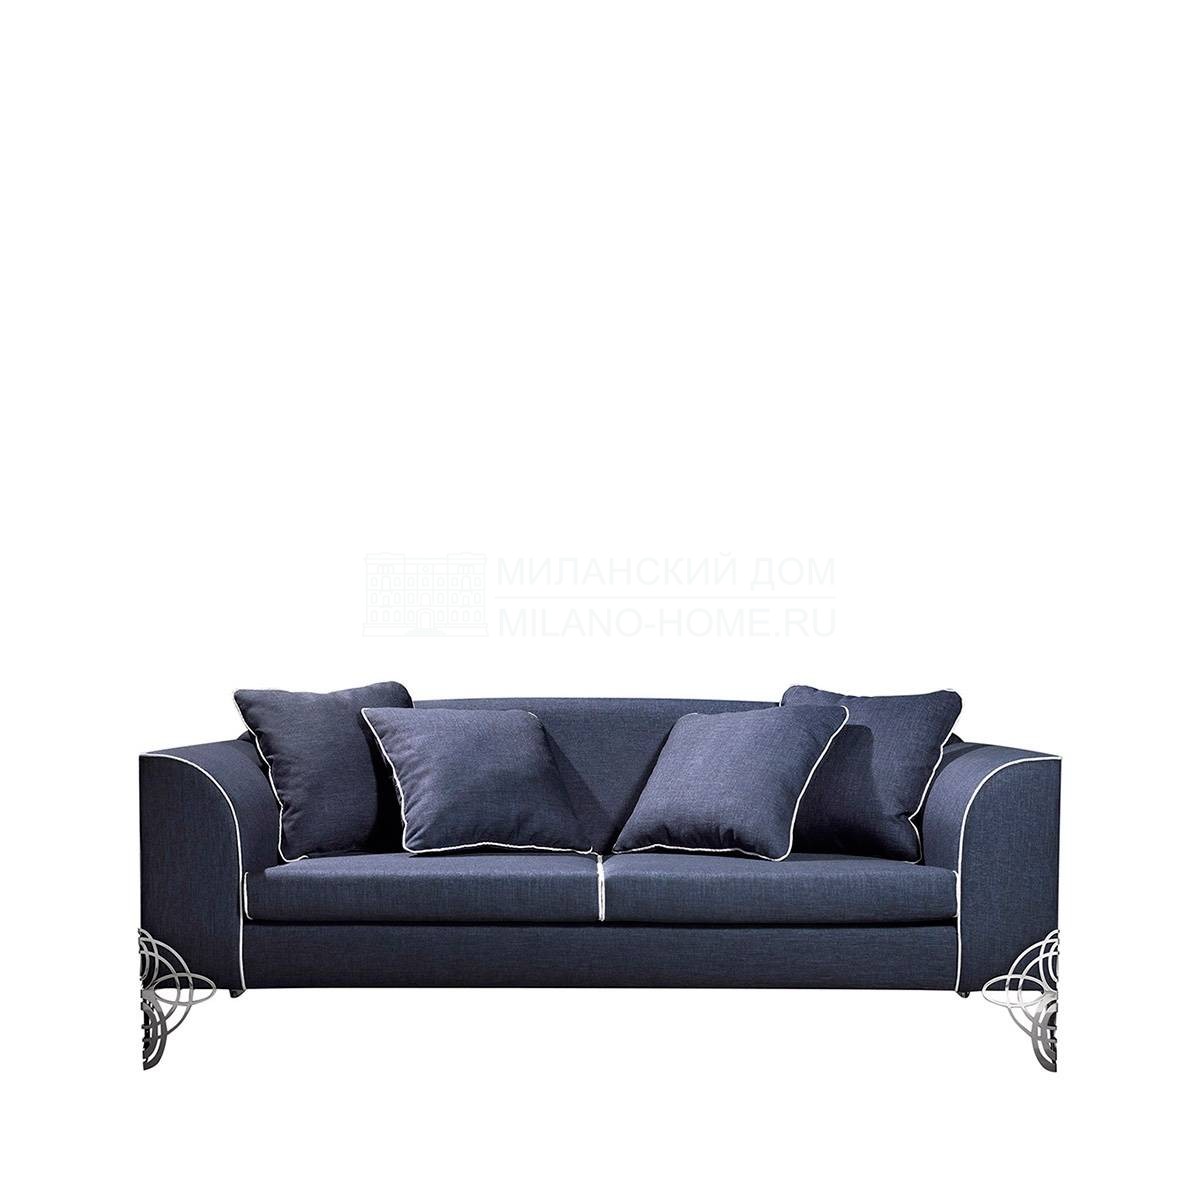 Прямой диван Regina/S1315 из Испании фабрики COLECCION ALEXANDRA